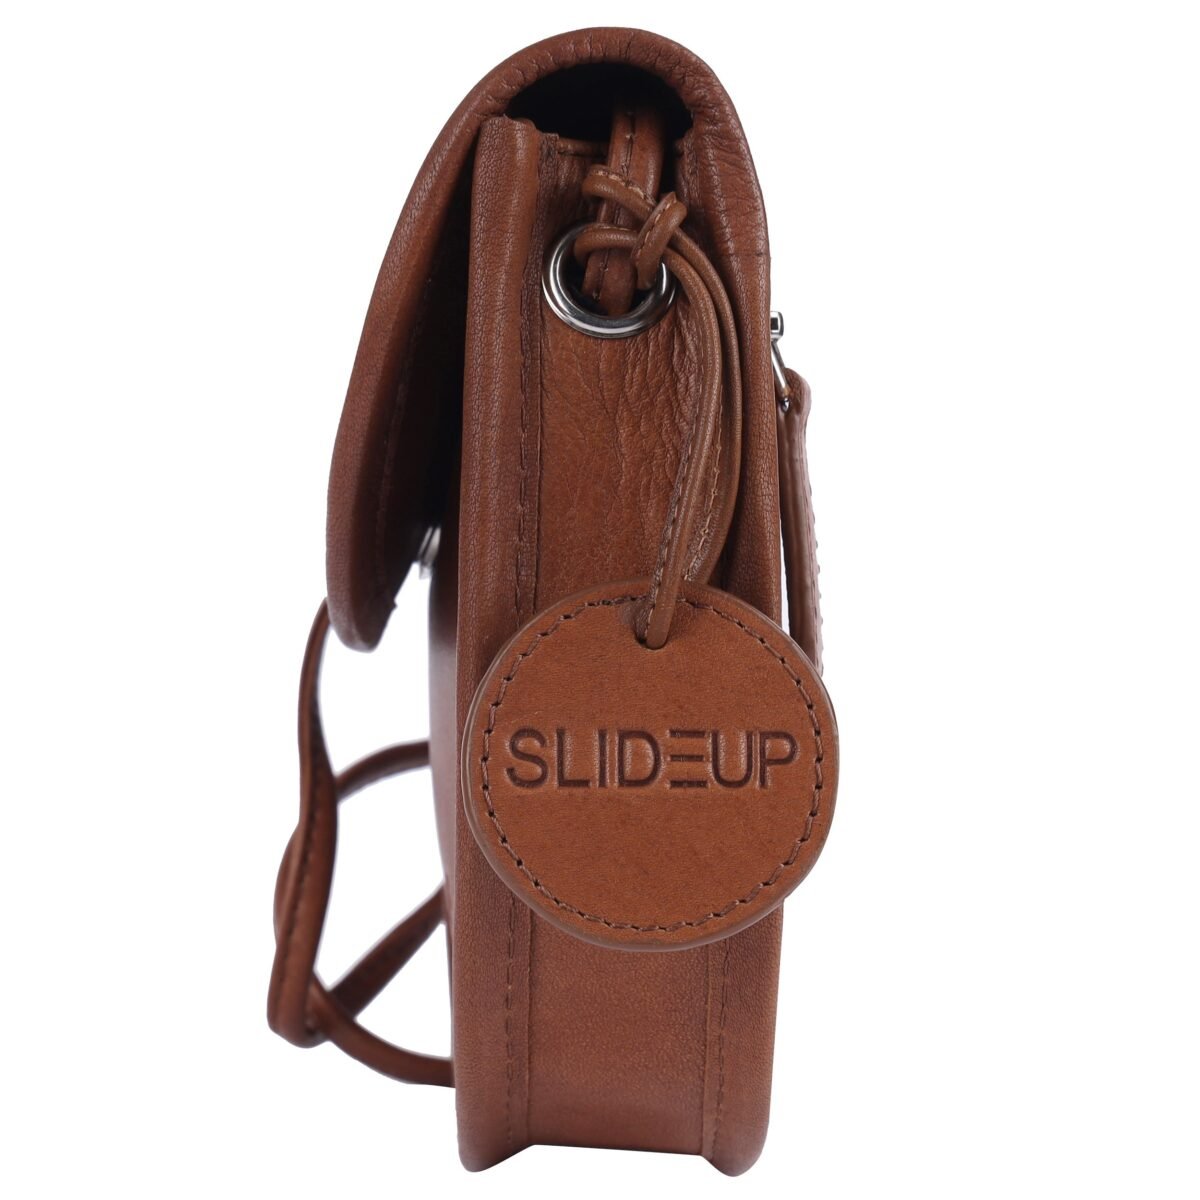 Slideup Bags Australia